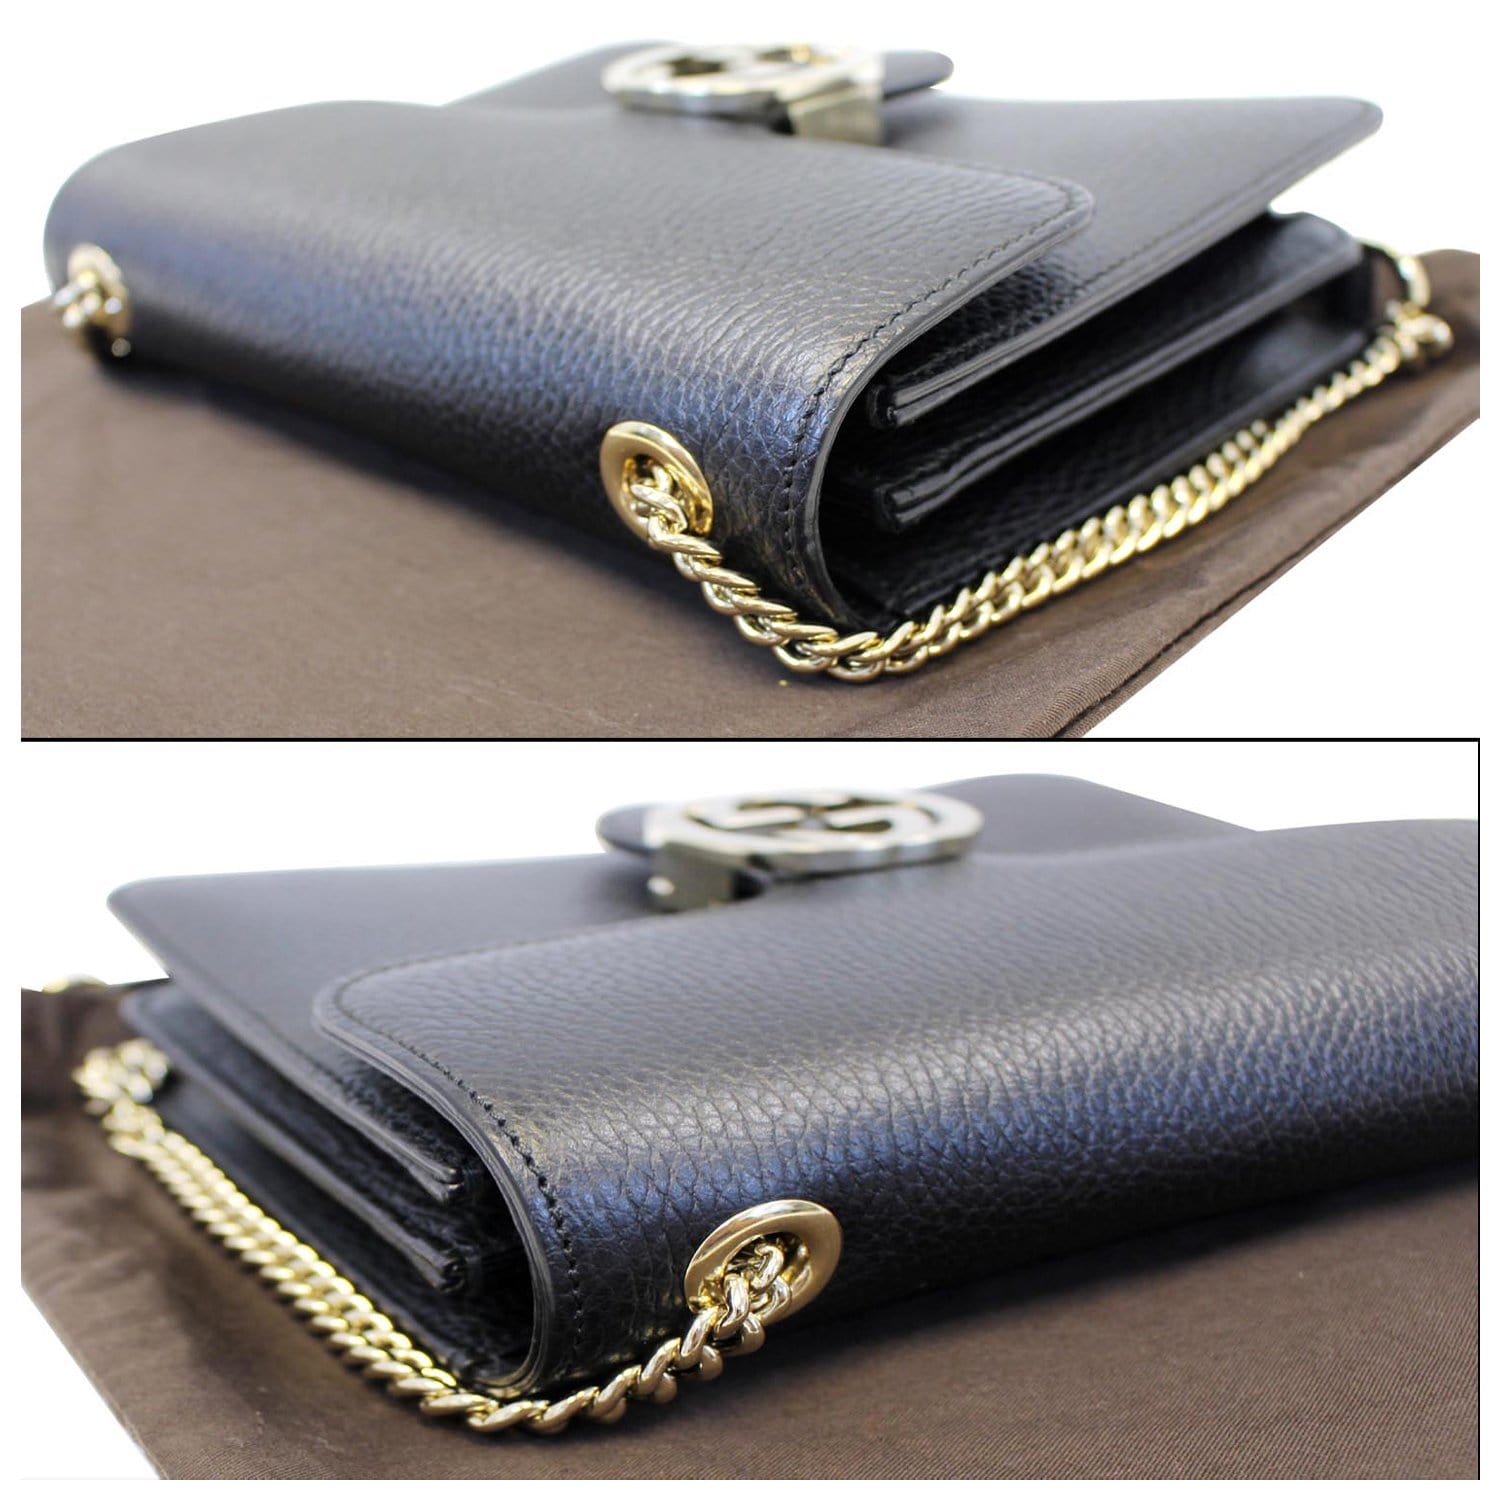 Gucci Black Leather Interlocking GG Wallet On Chain Gucci